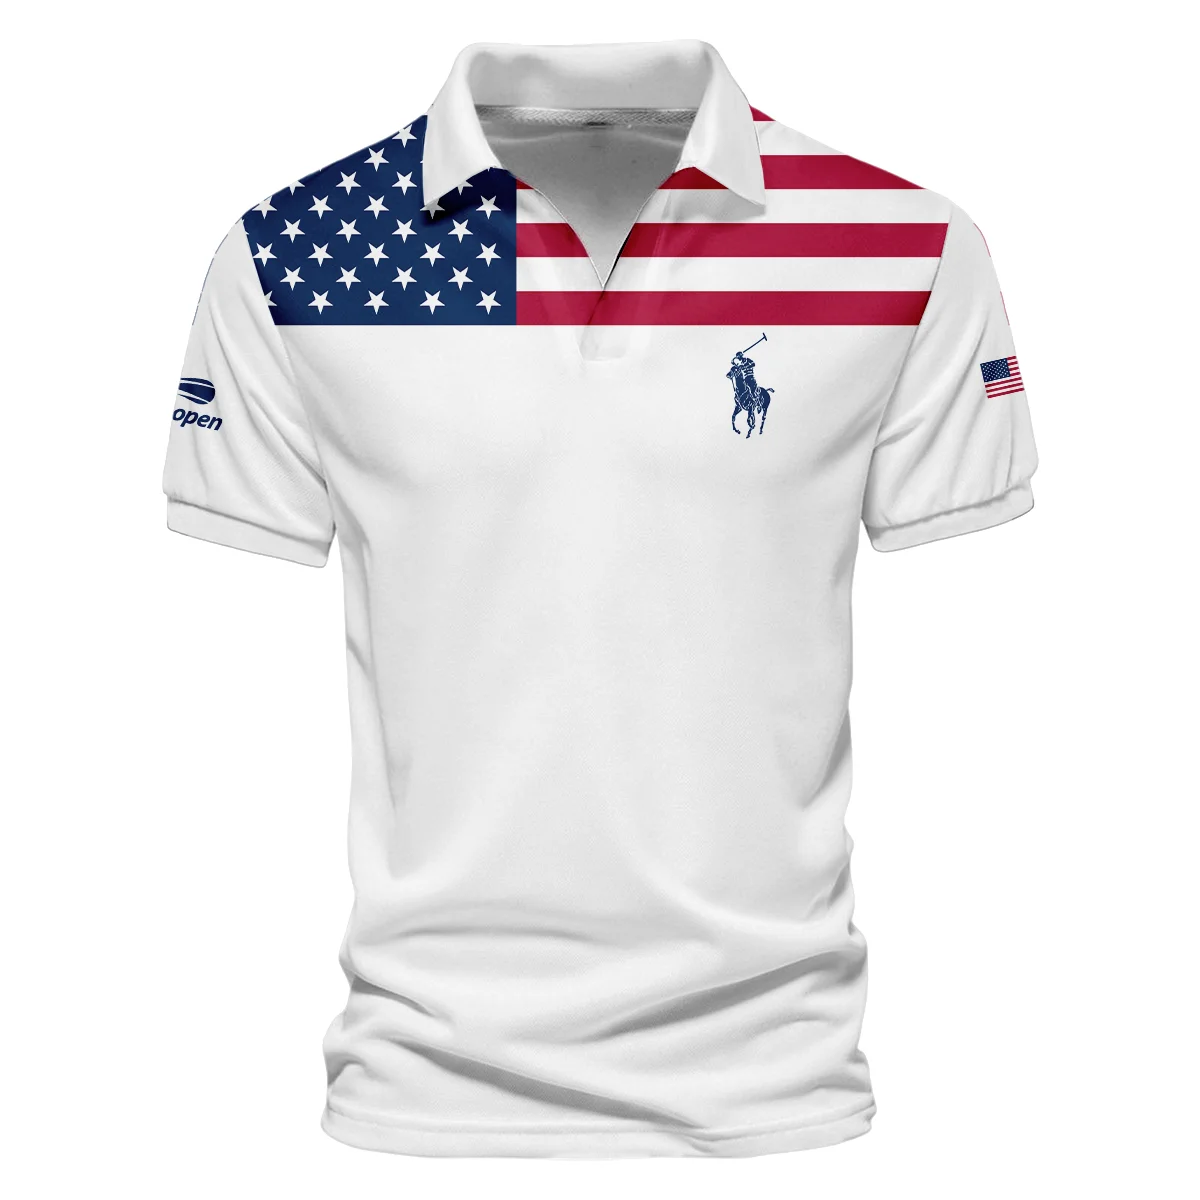 US Open Tennis Champions Ralph Lauren USA Flag White Vneck Polo Shirt Style Classic Polo Shirt For Men